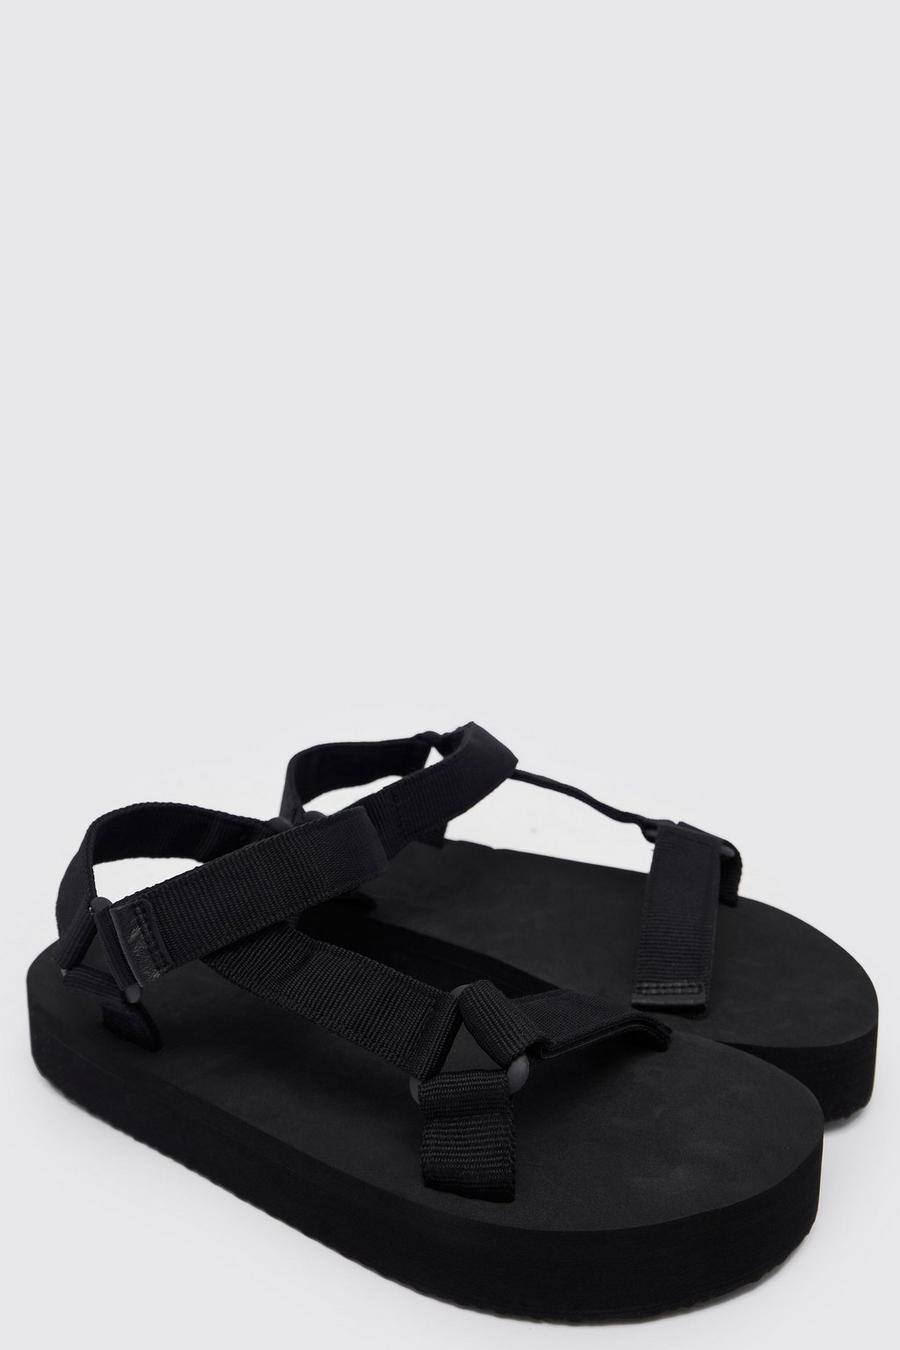 Black nero Technical Sandal